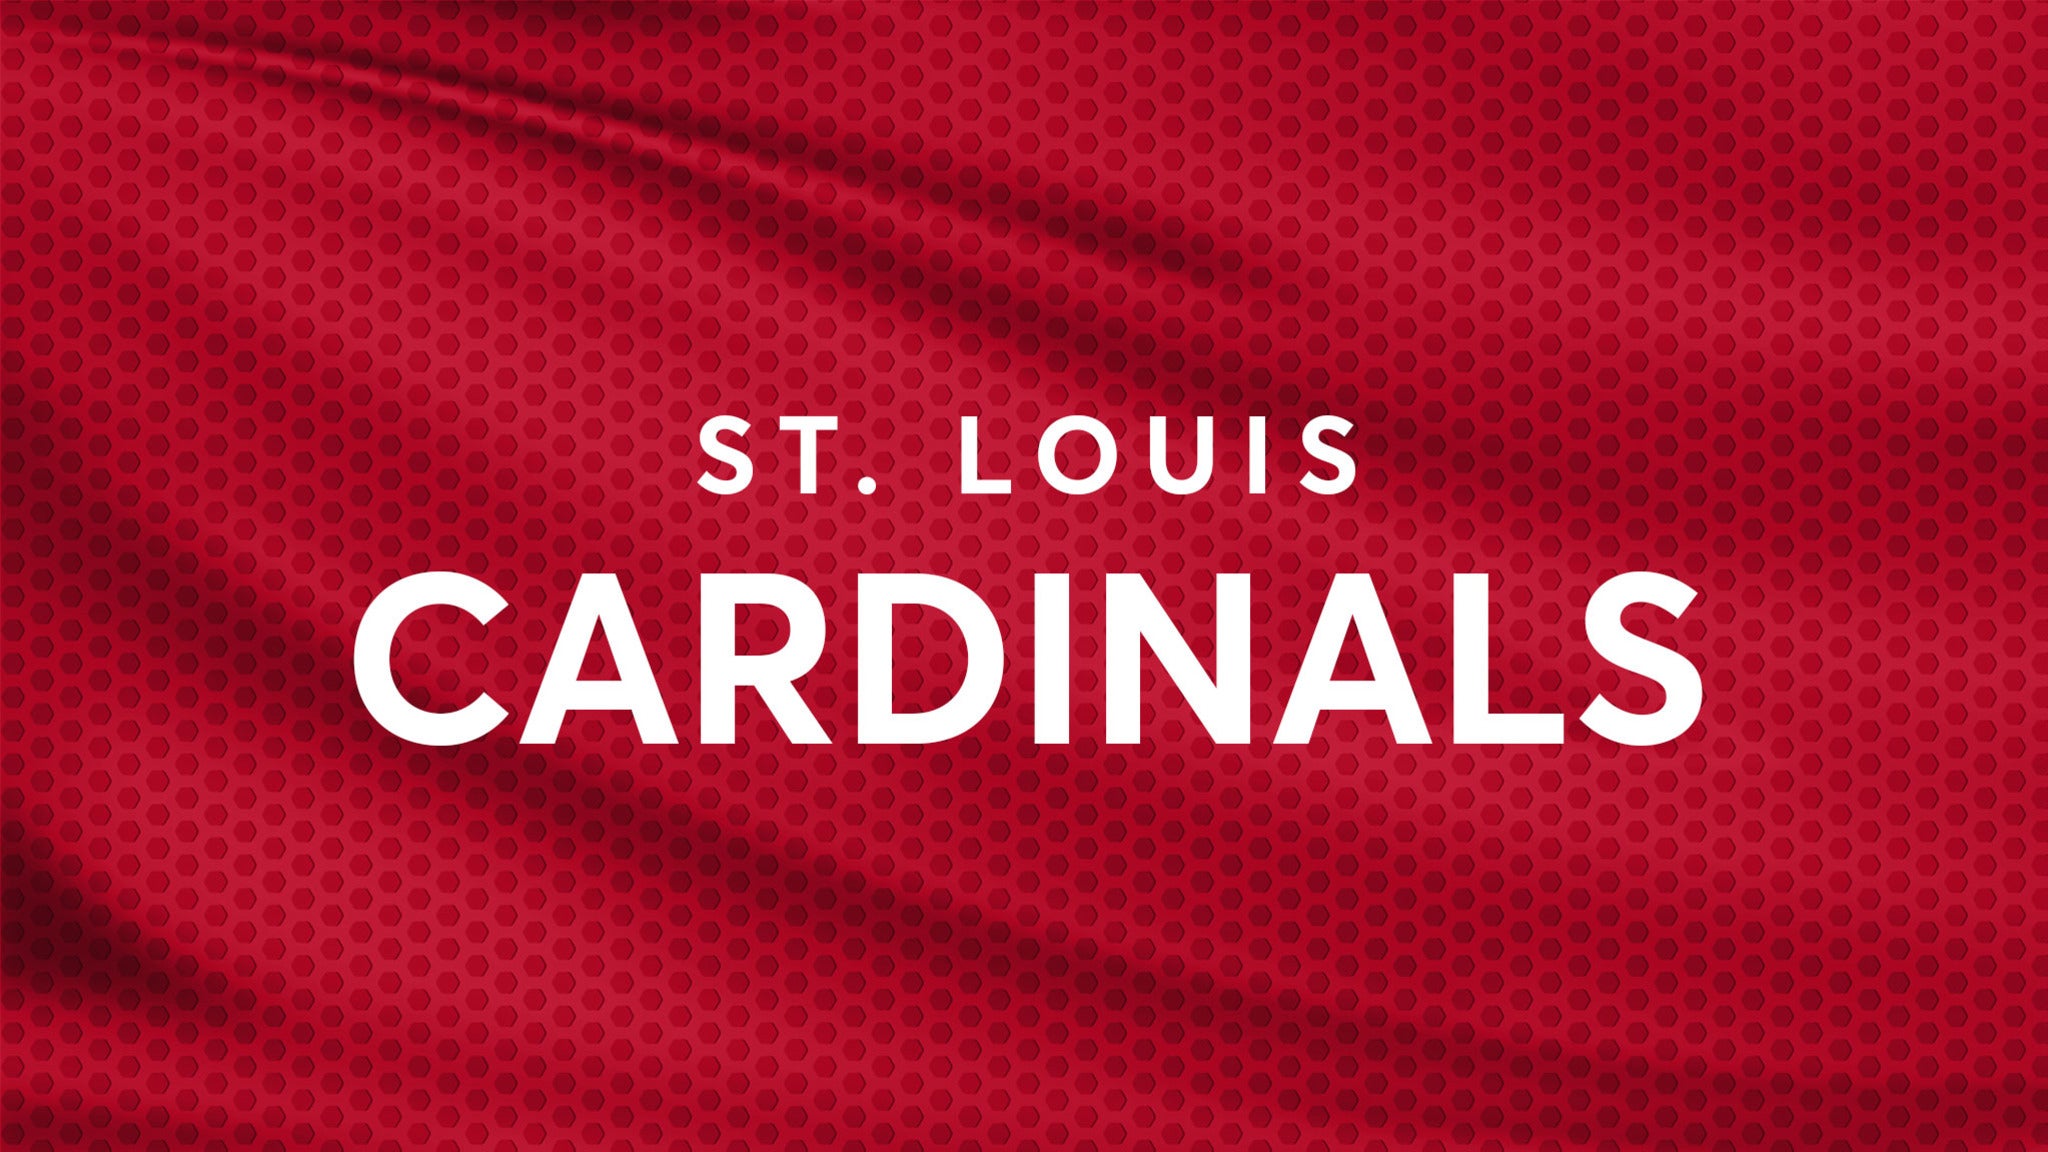 St. Louis Cardinals vs. Miami Marlins